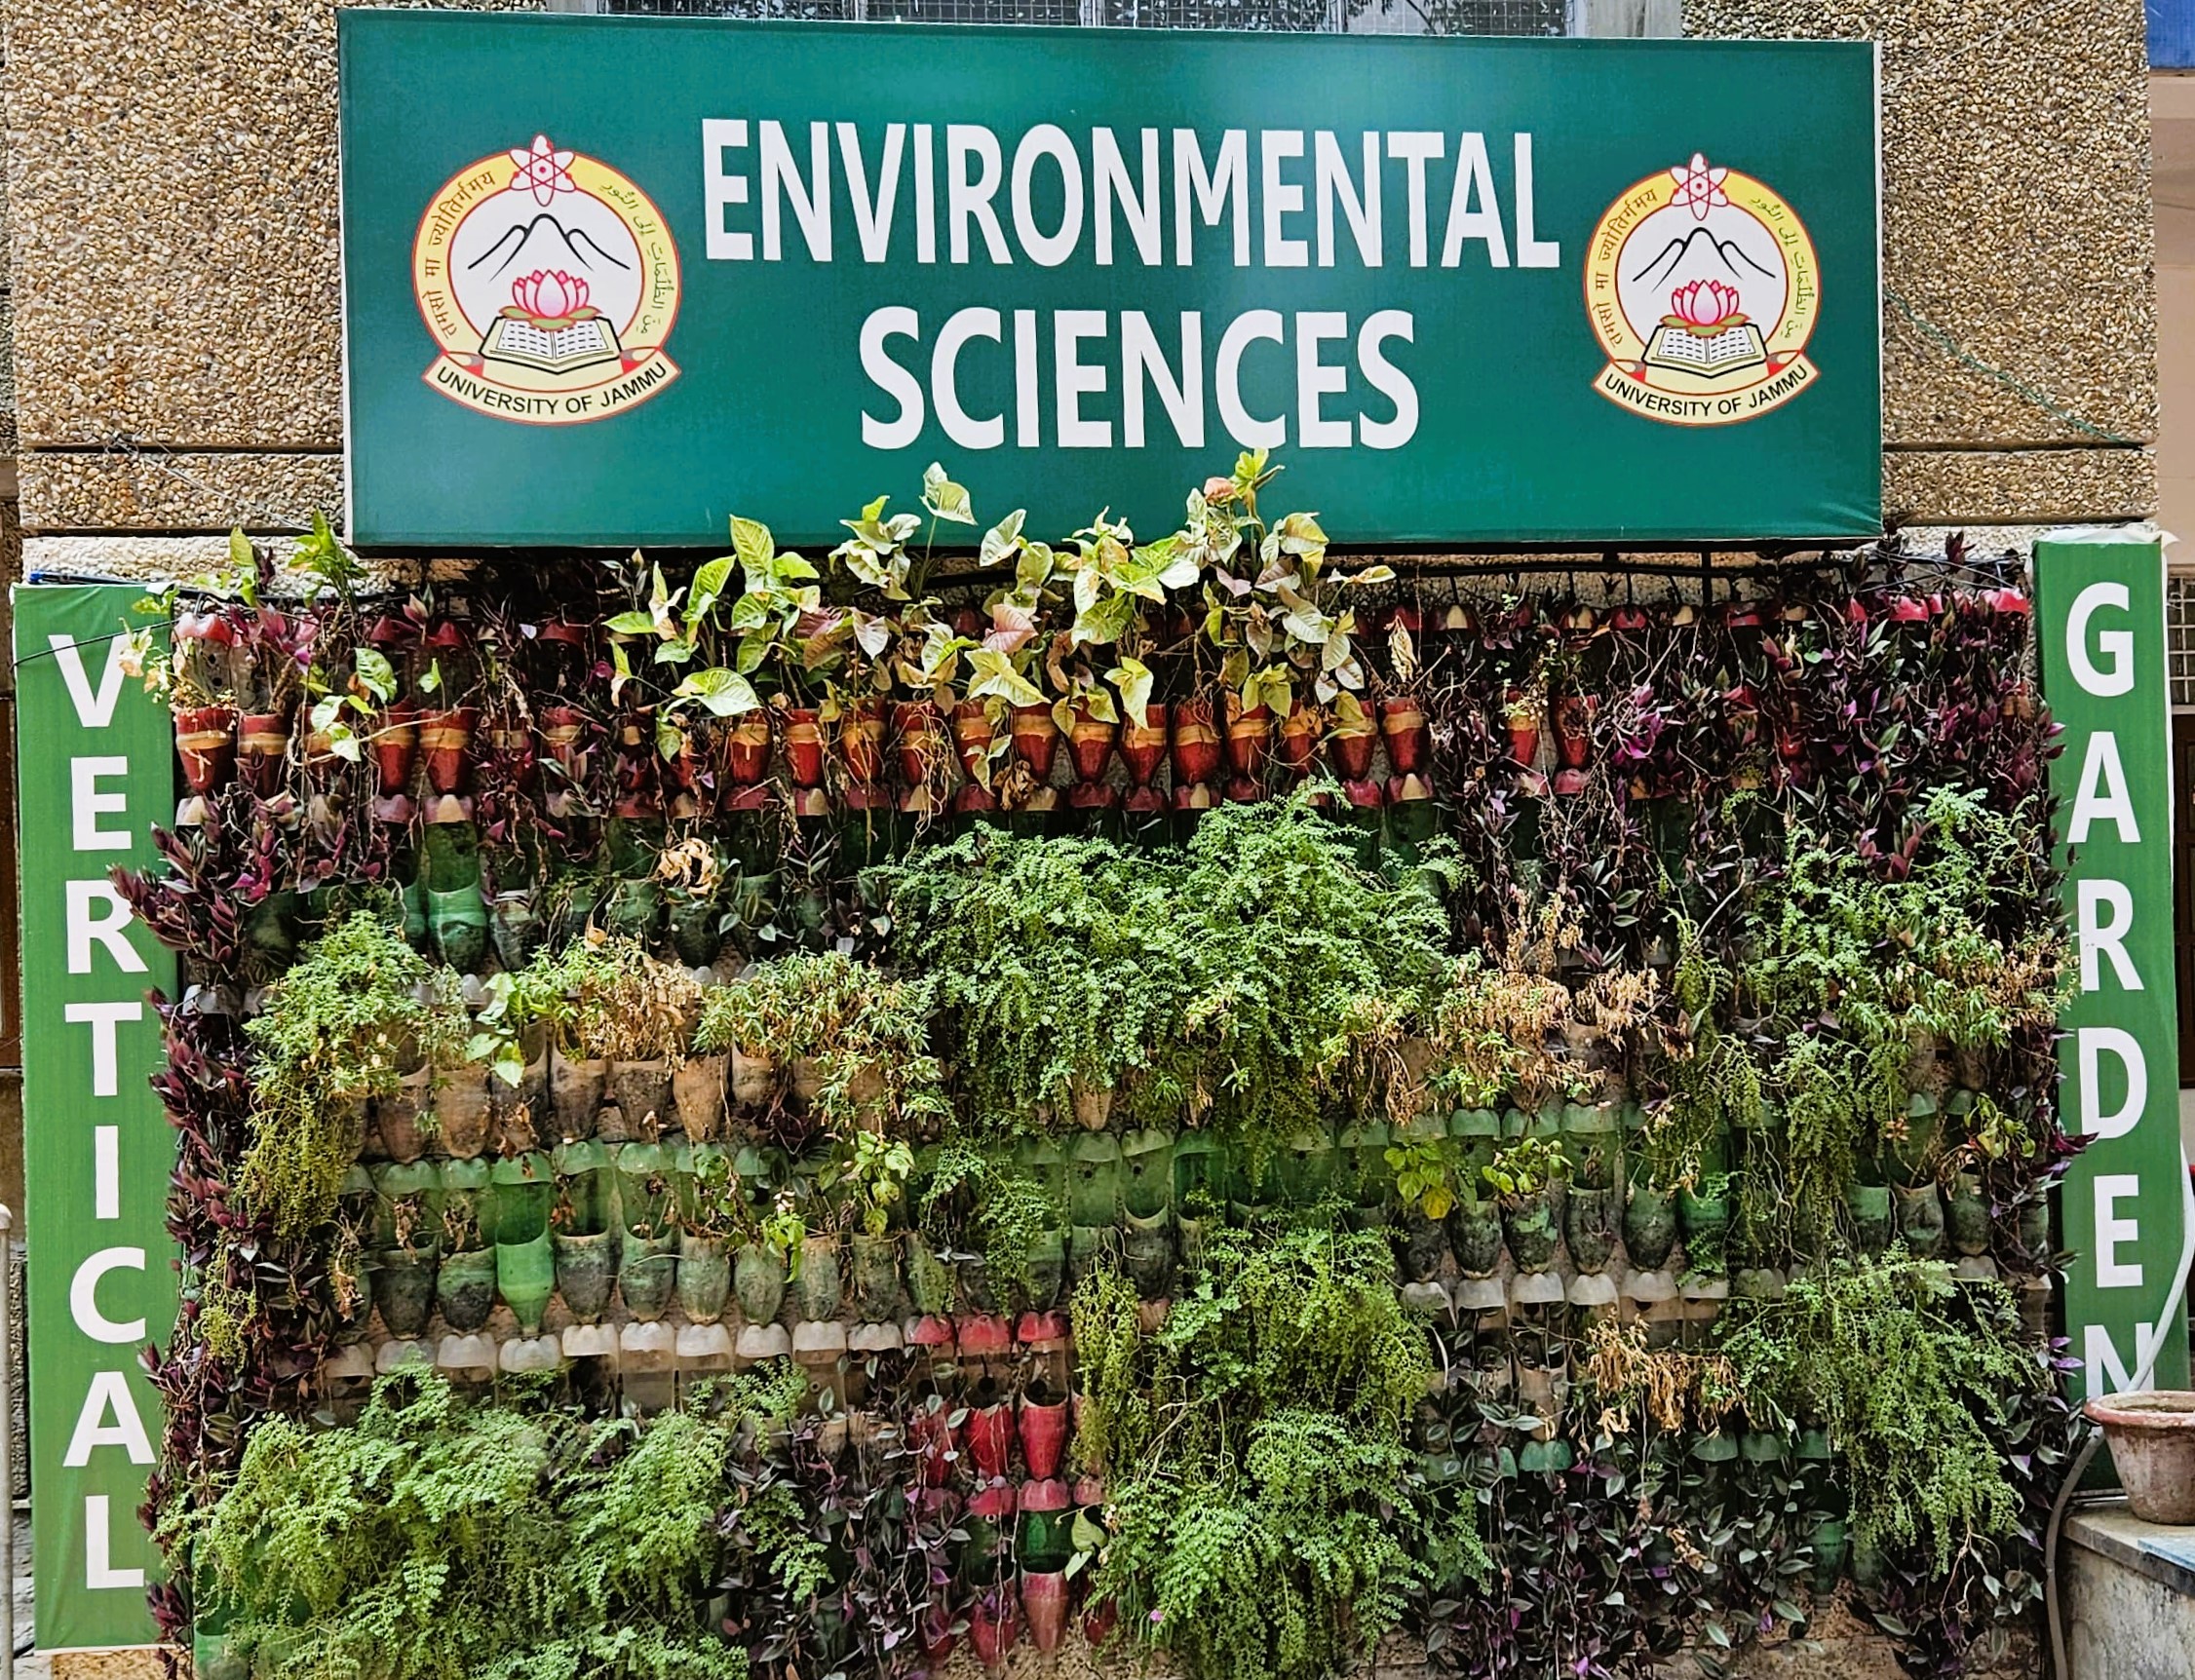 Vertical Garden at Department of Environmental Sciences